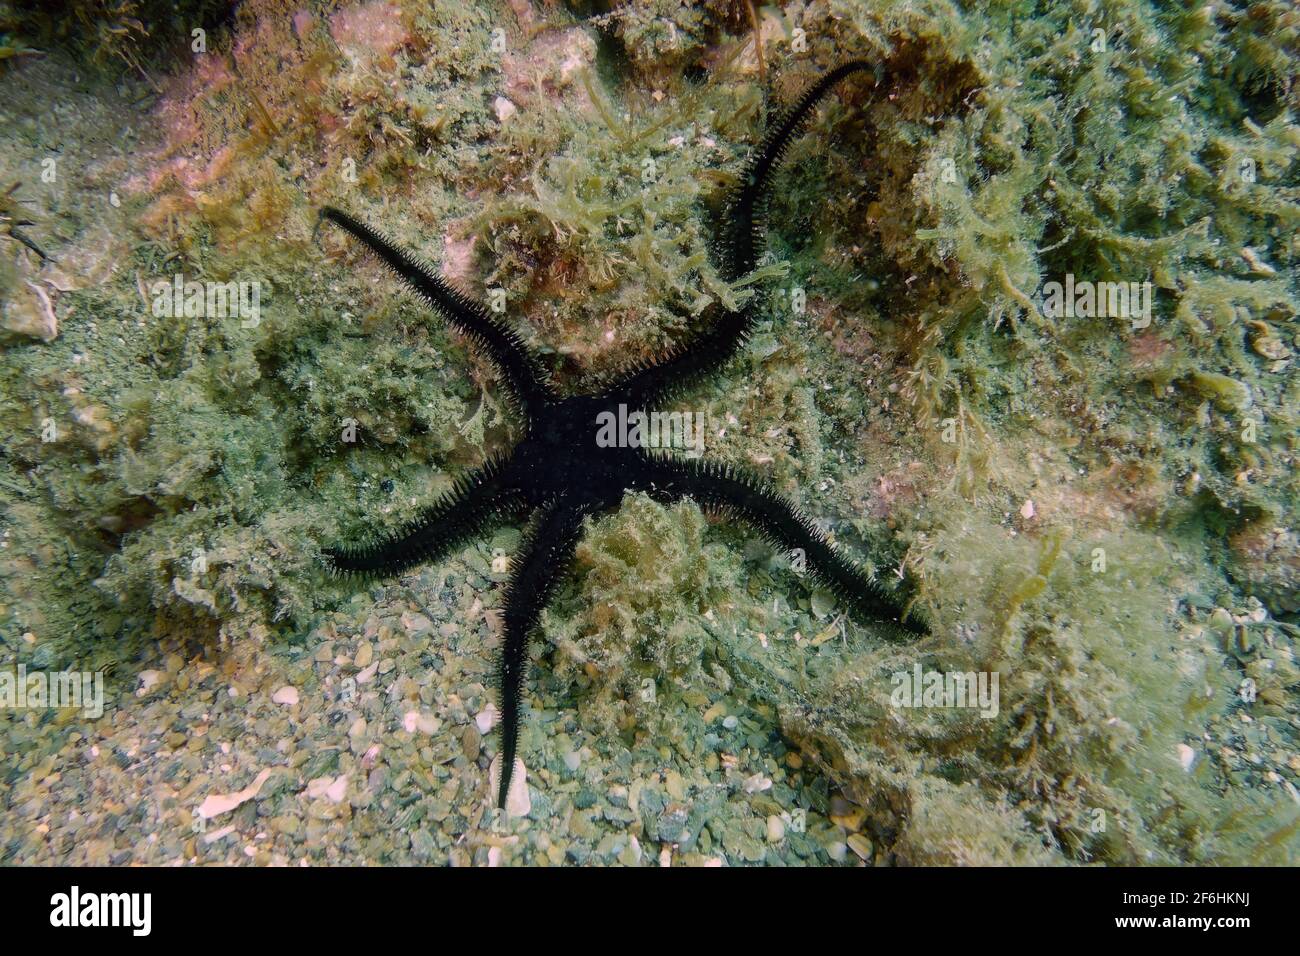 Black brittle-star or Black serpent star (Ophiocomina nigra) Stock Photo